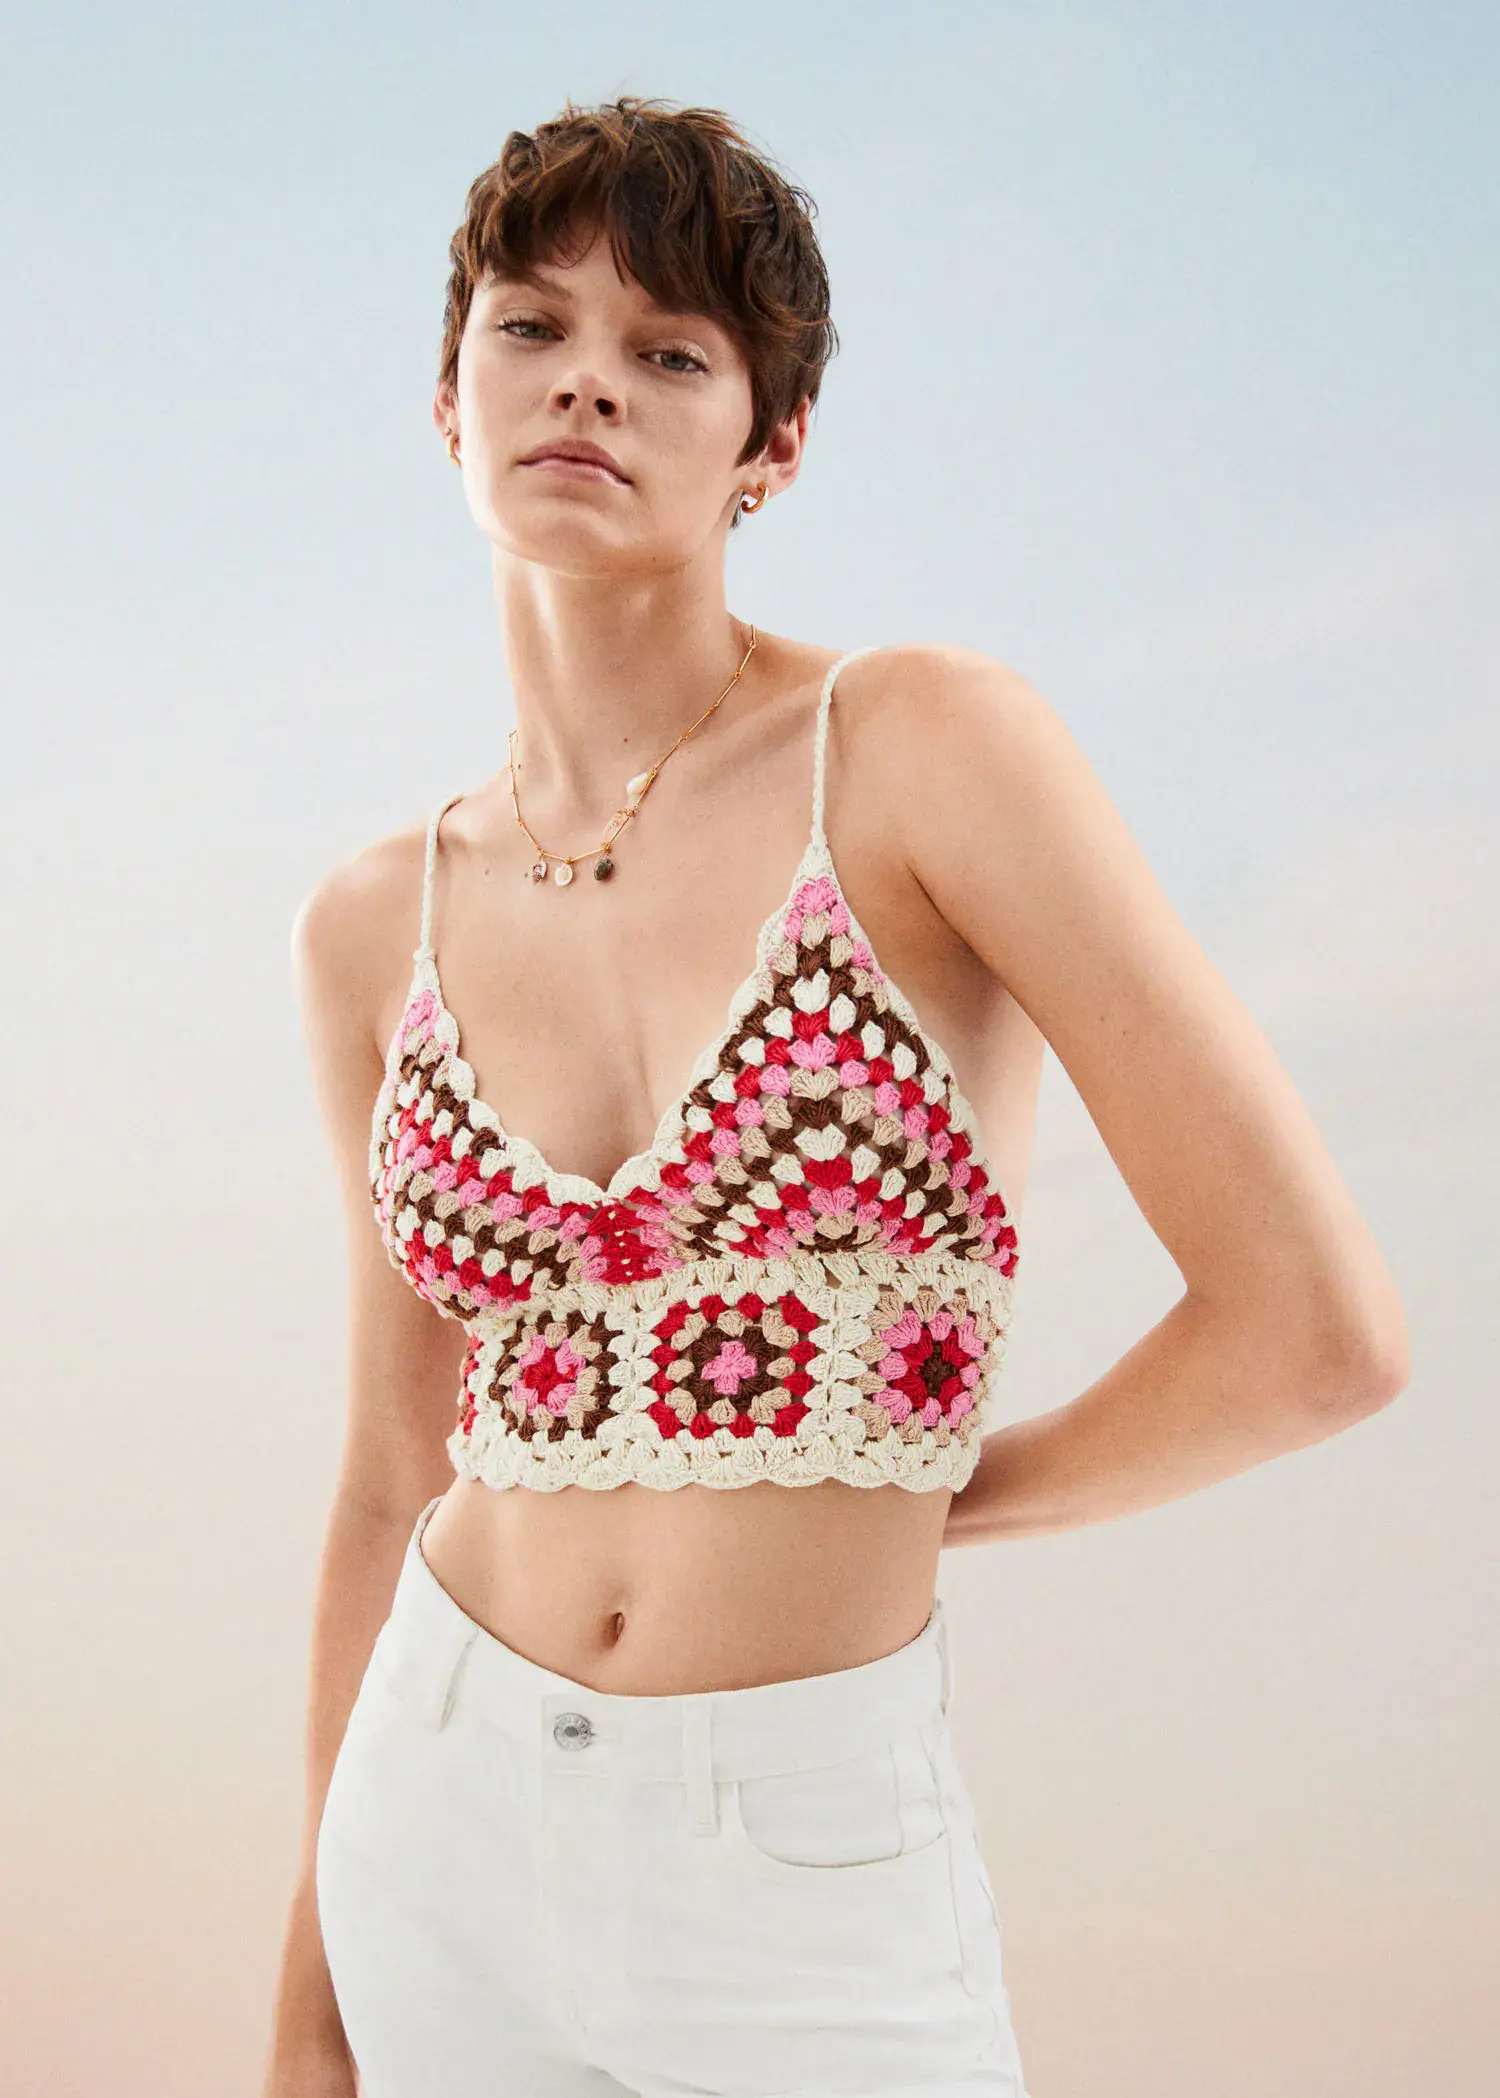 Mango Crochet crop top. a young woman wearing a crocheted bra top. 